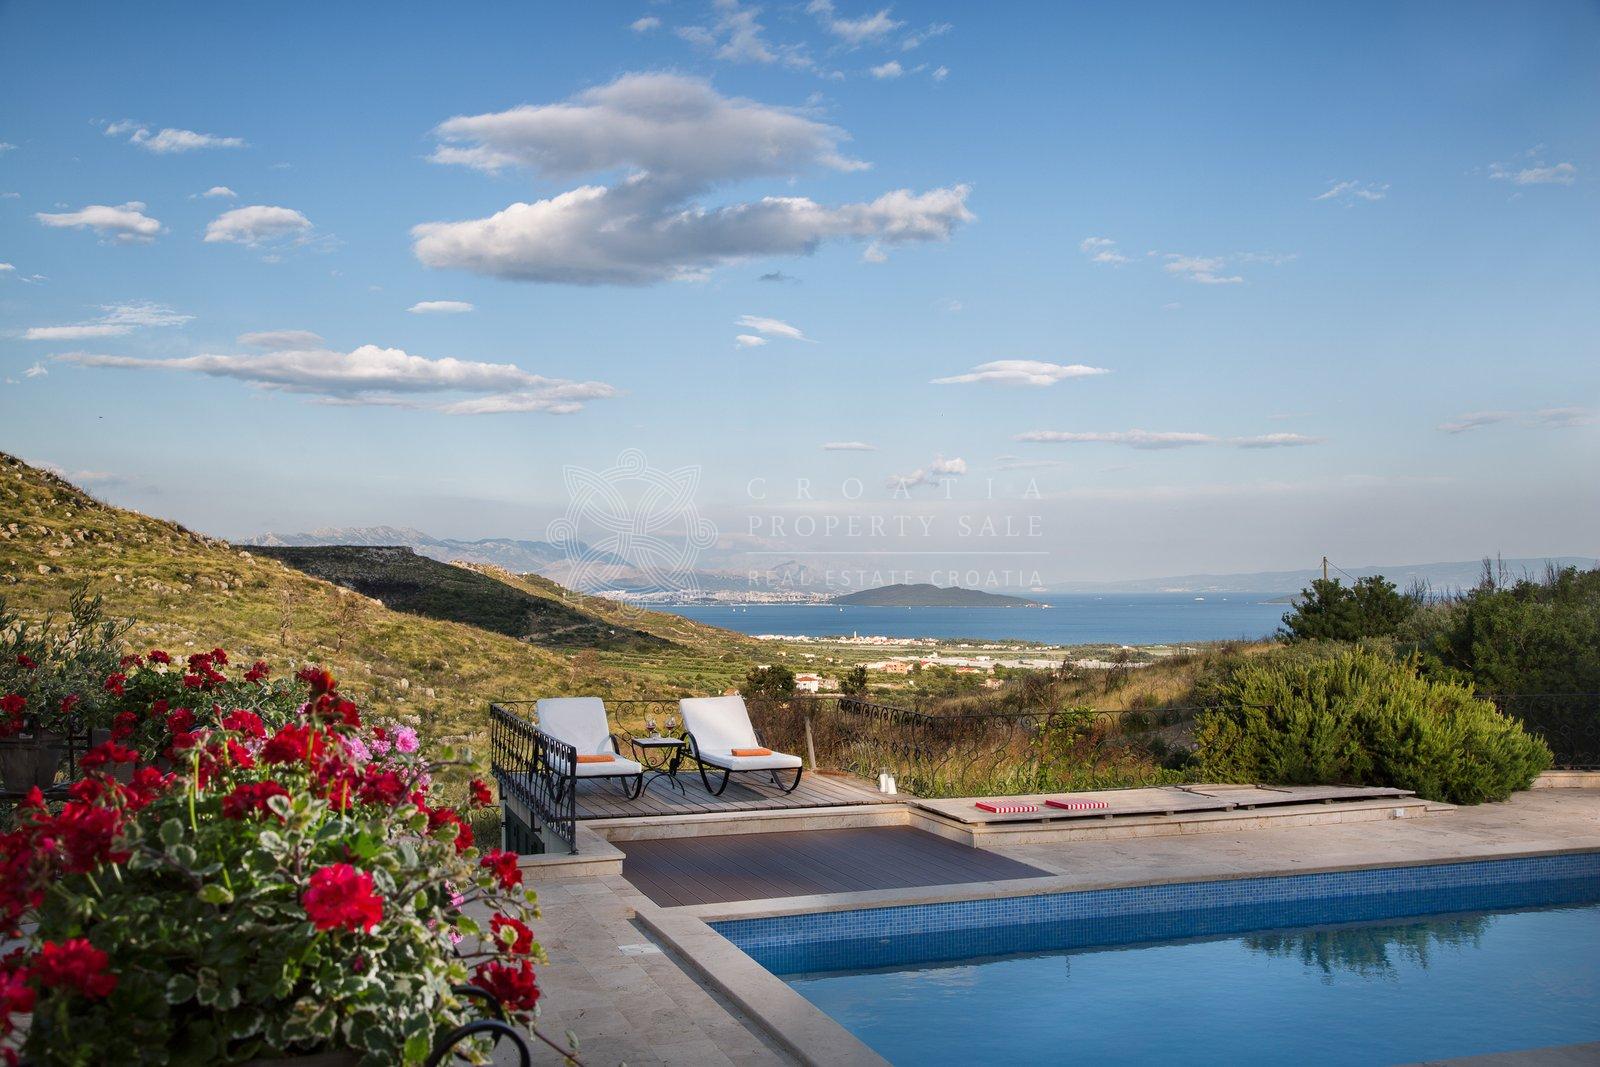 Croatia Trogir area sea view real estate for sale